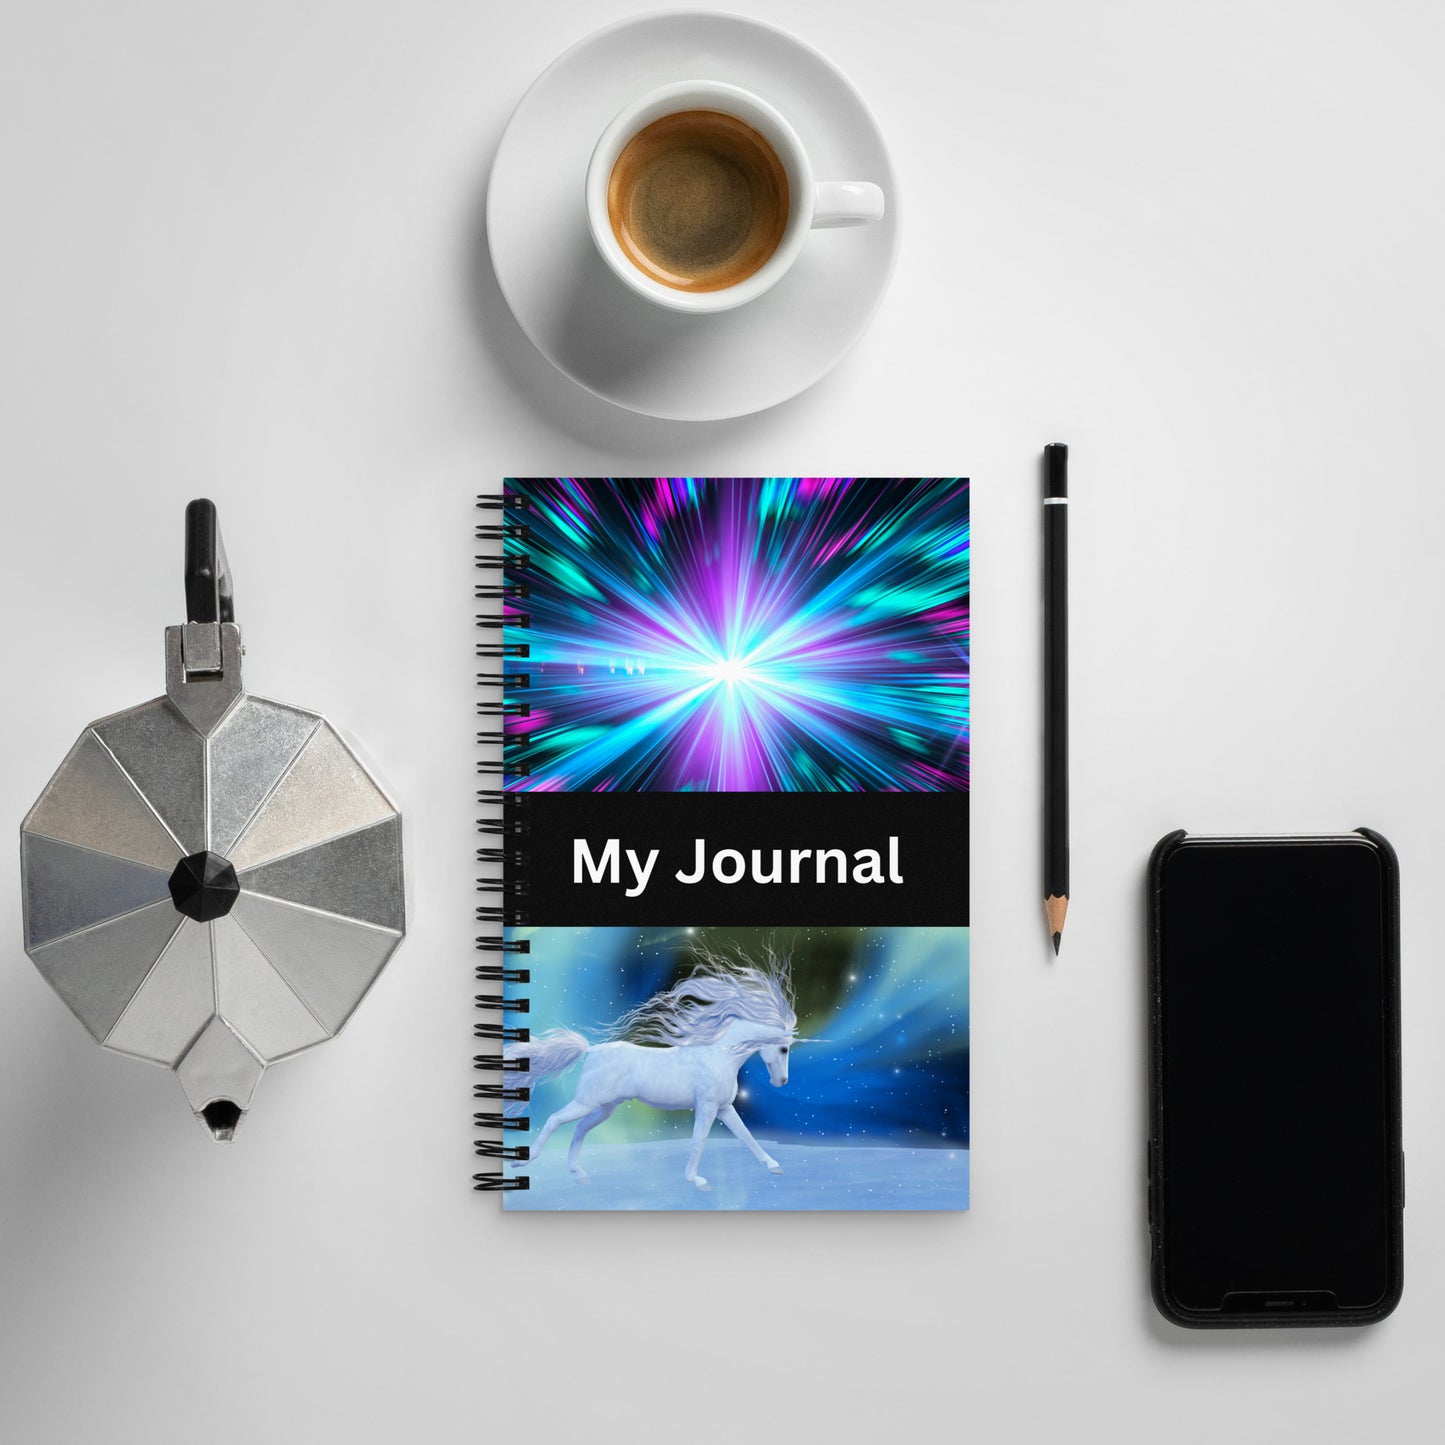 "My Journal" Spiral notebook